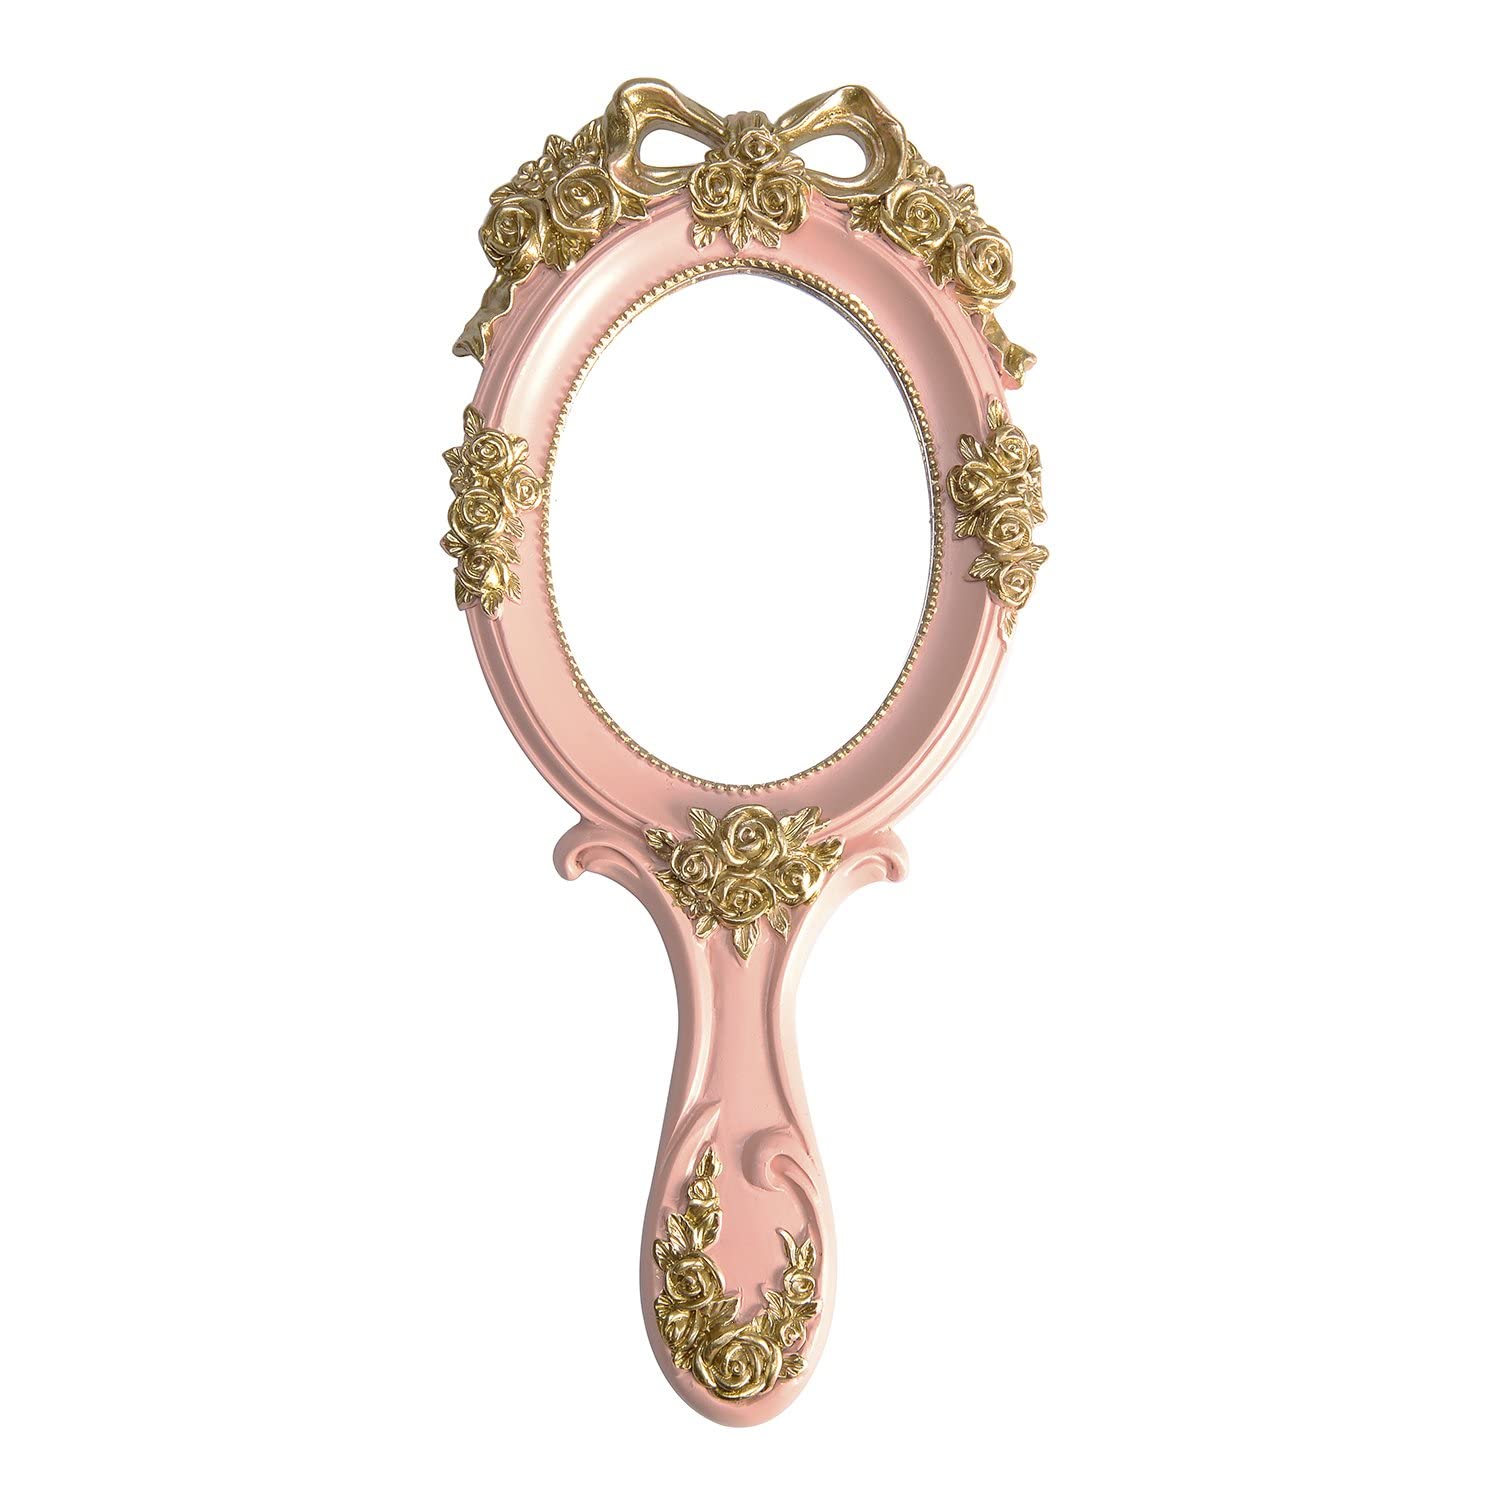 Taywes Vintage Hand Mirror with Handle - Cute Princess Pink Rose